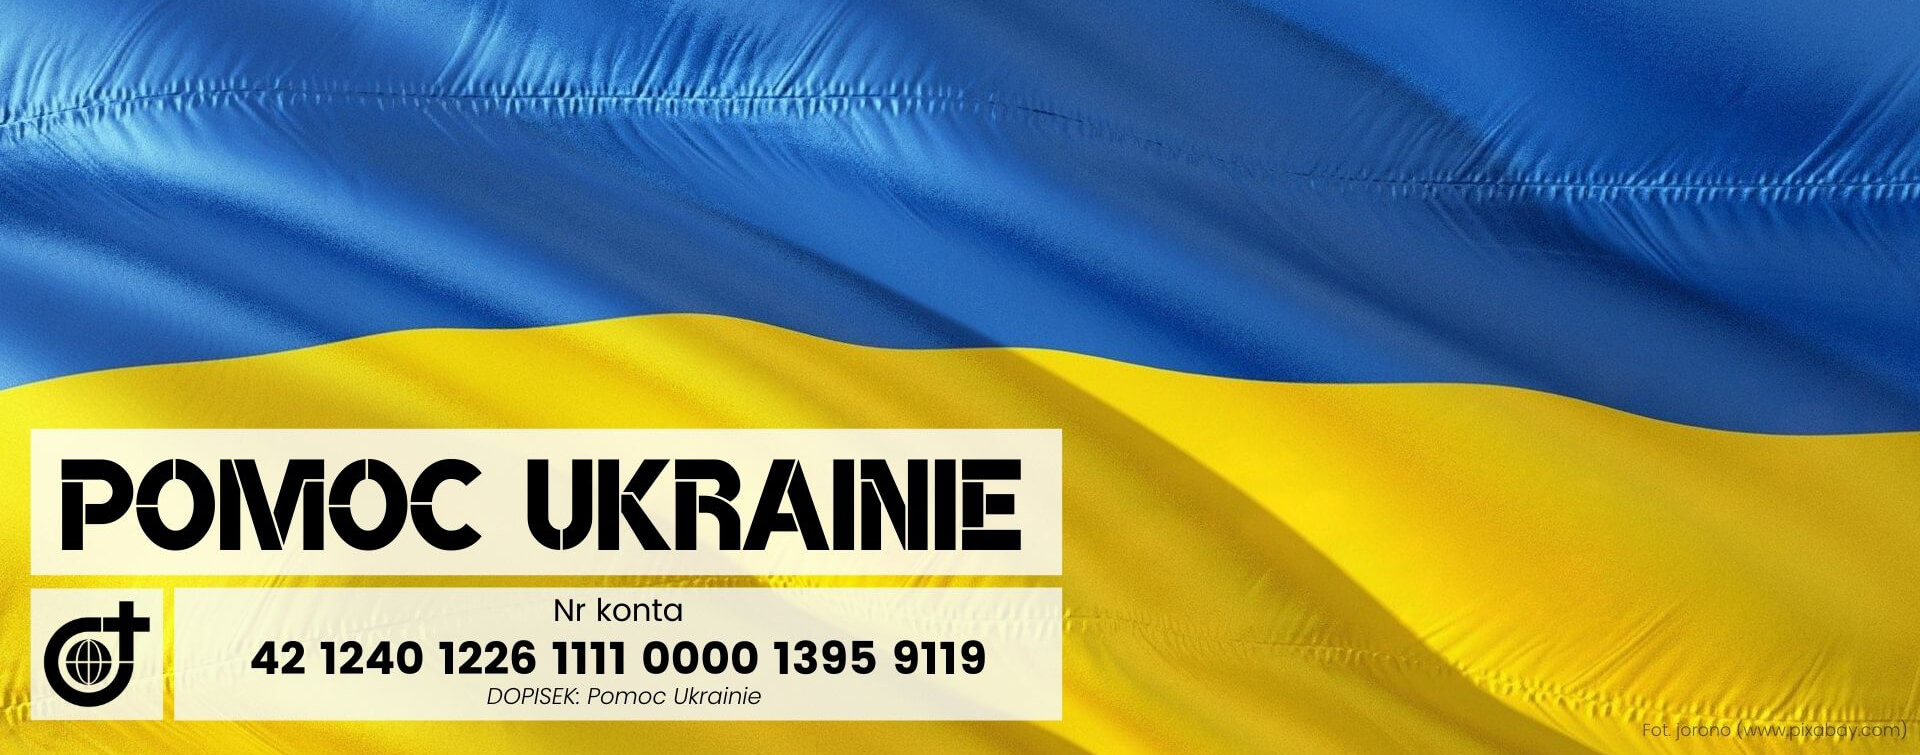 Pomoc Ukrainie BANNER